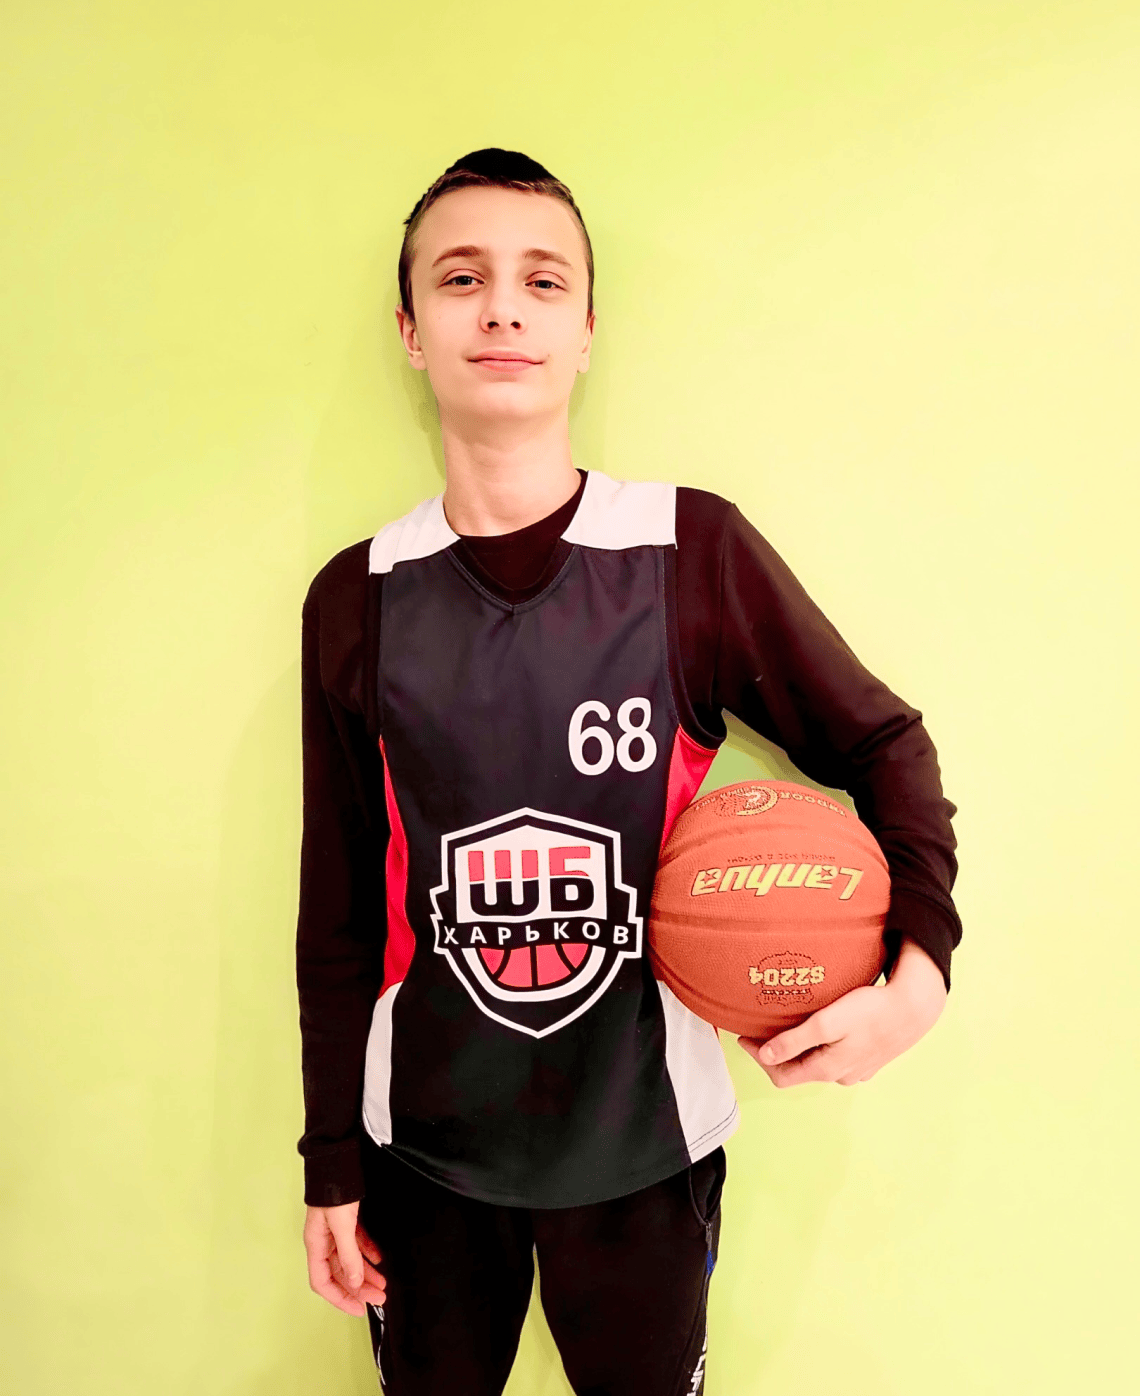 15-year-old Ruslan from Kharkiv